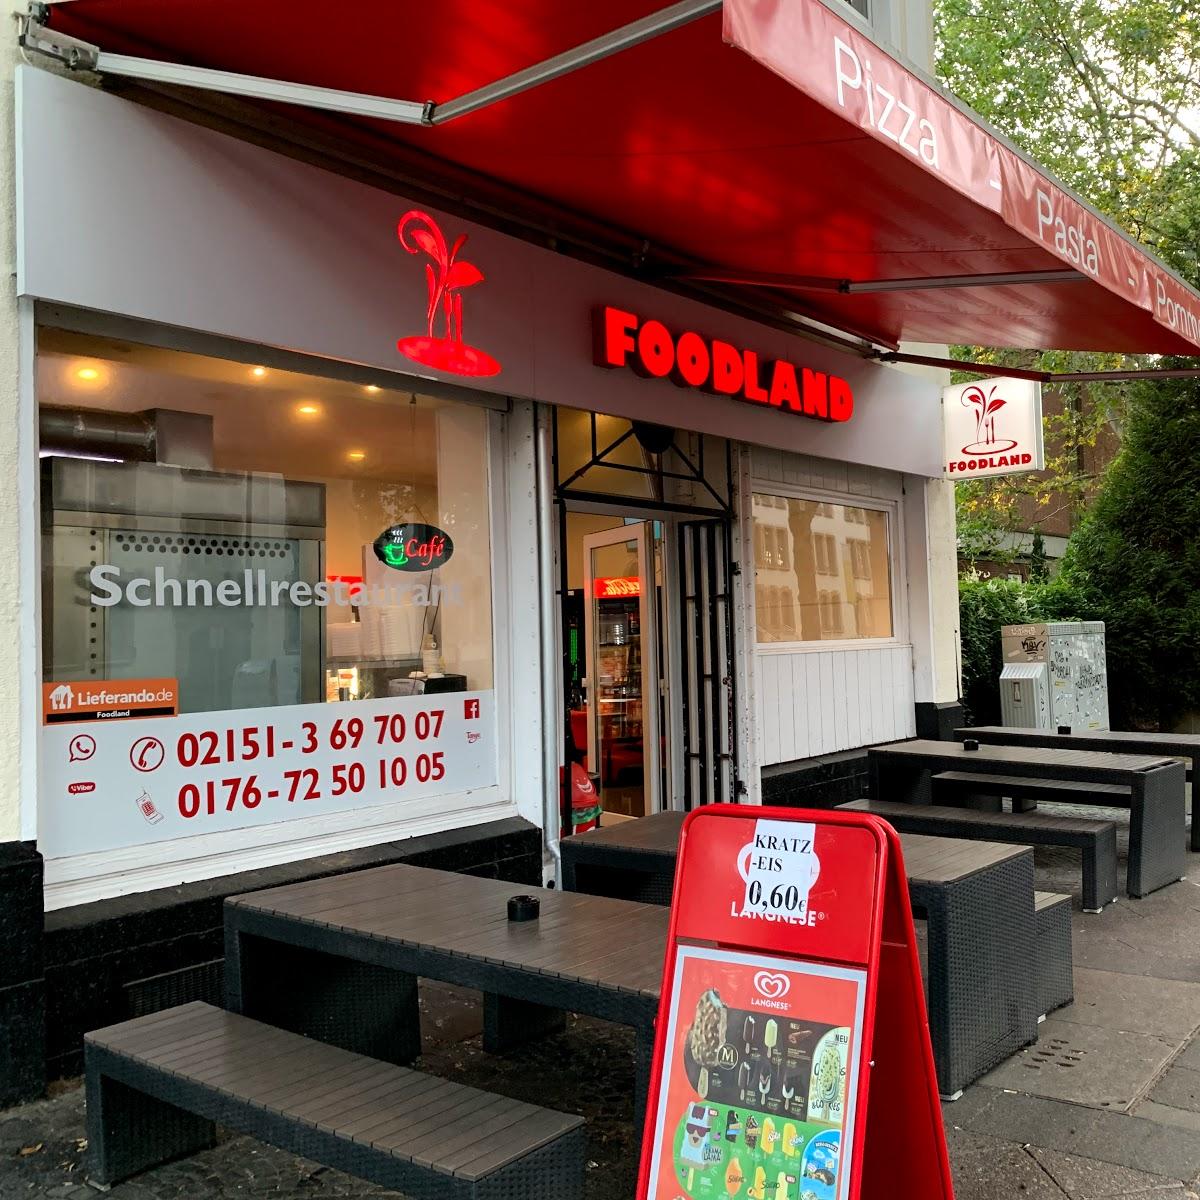 Restaurant "Pizzeria Foodland" in Krefeld